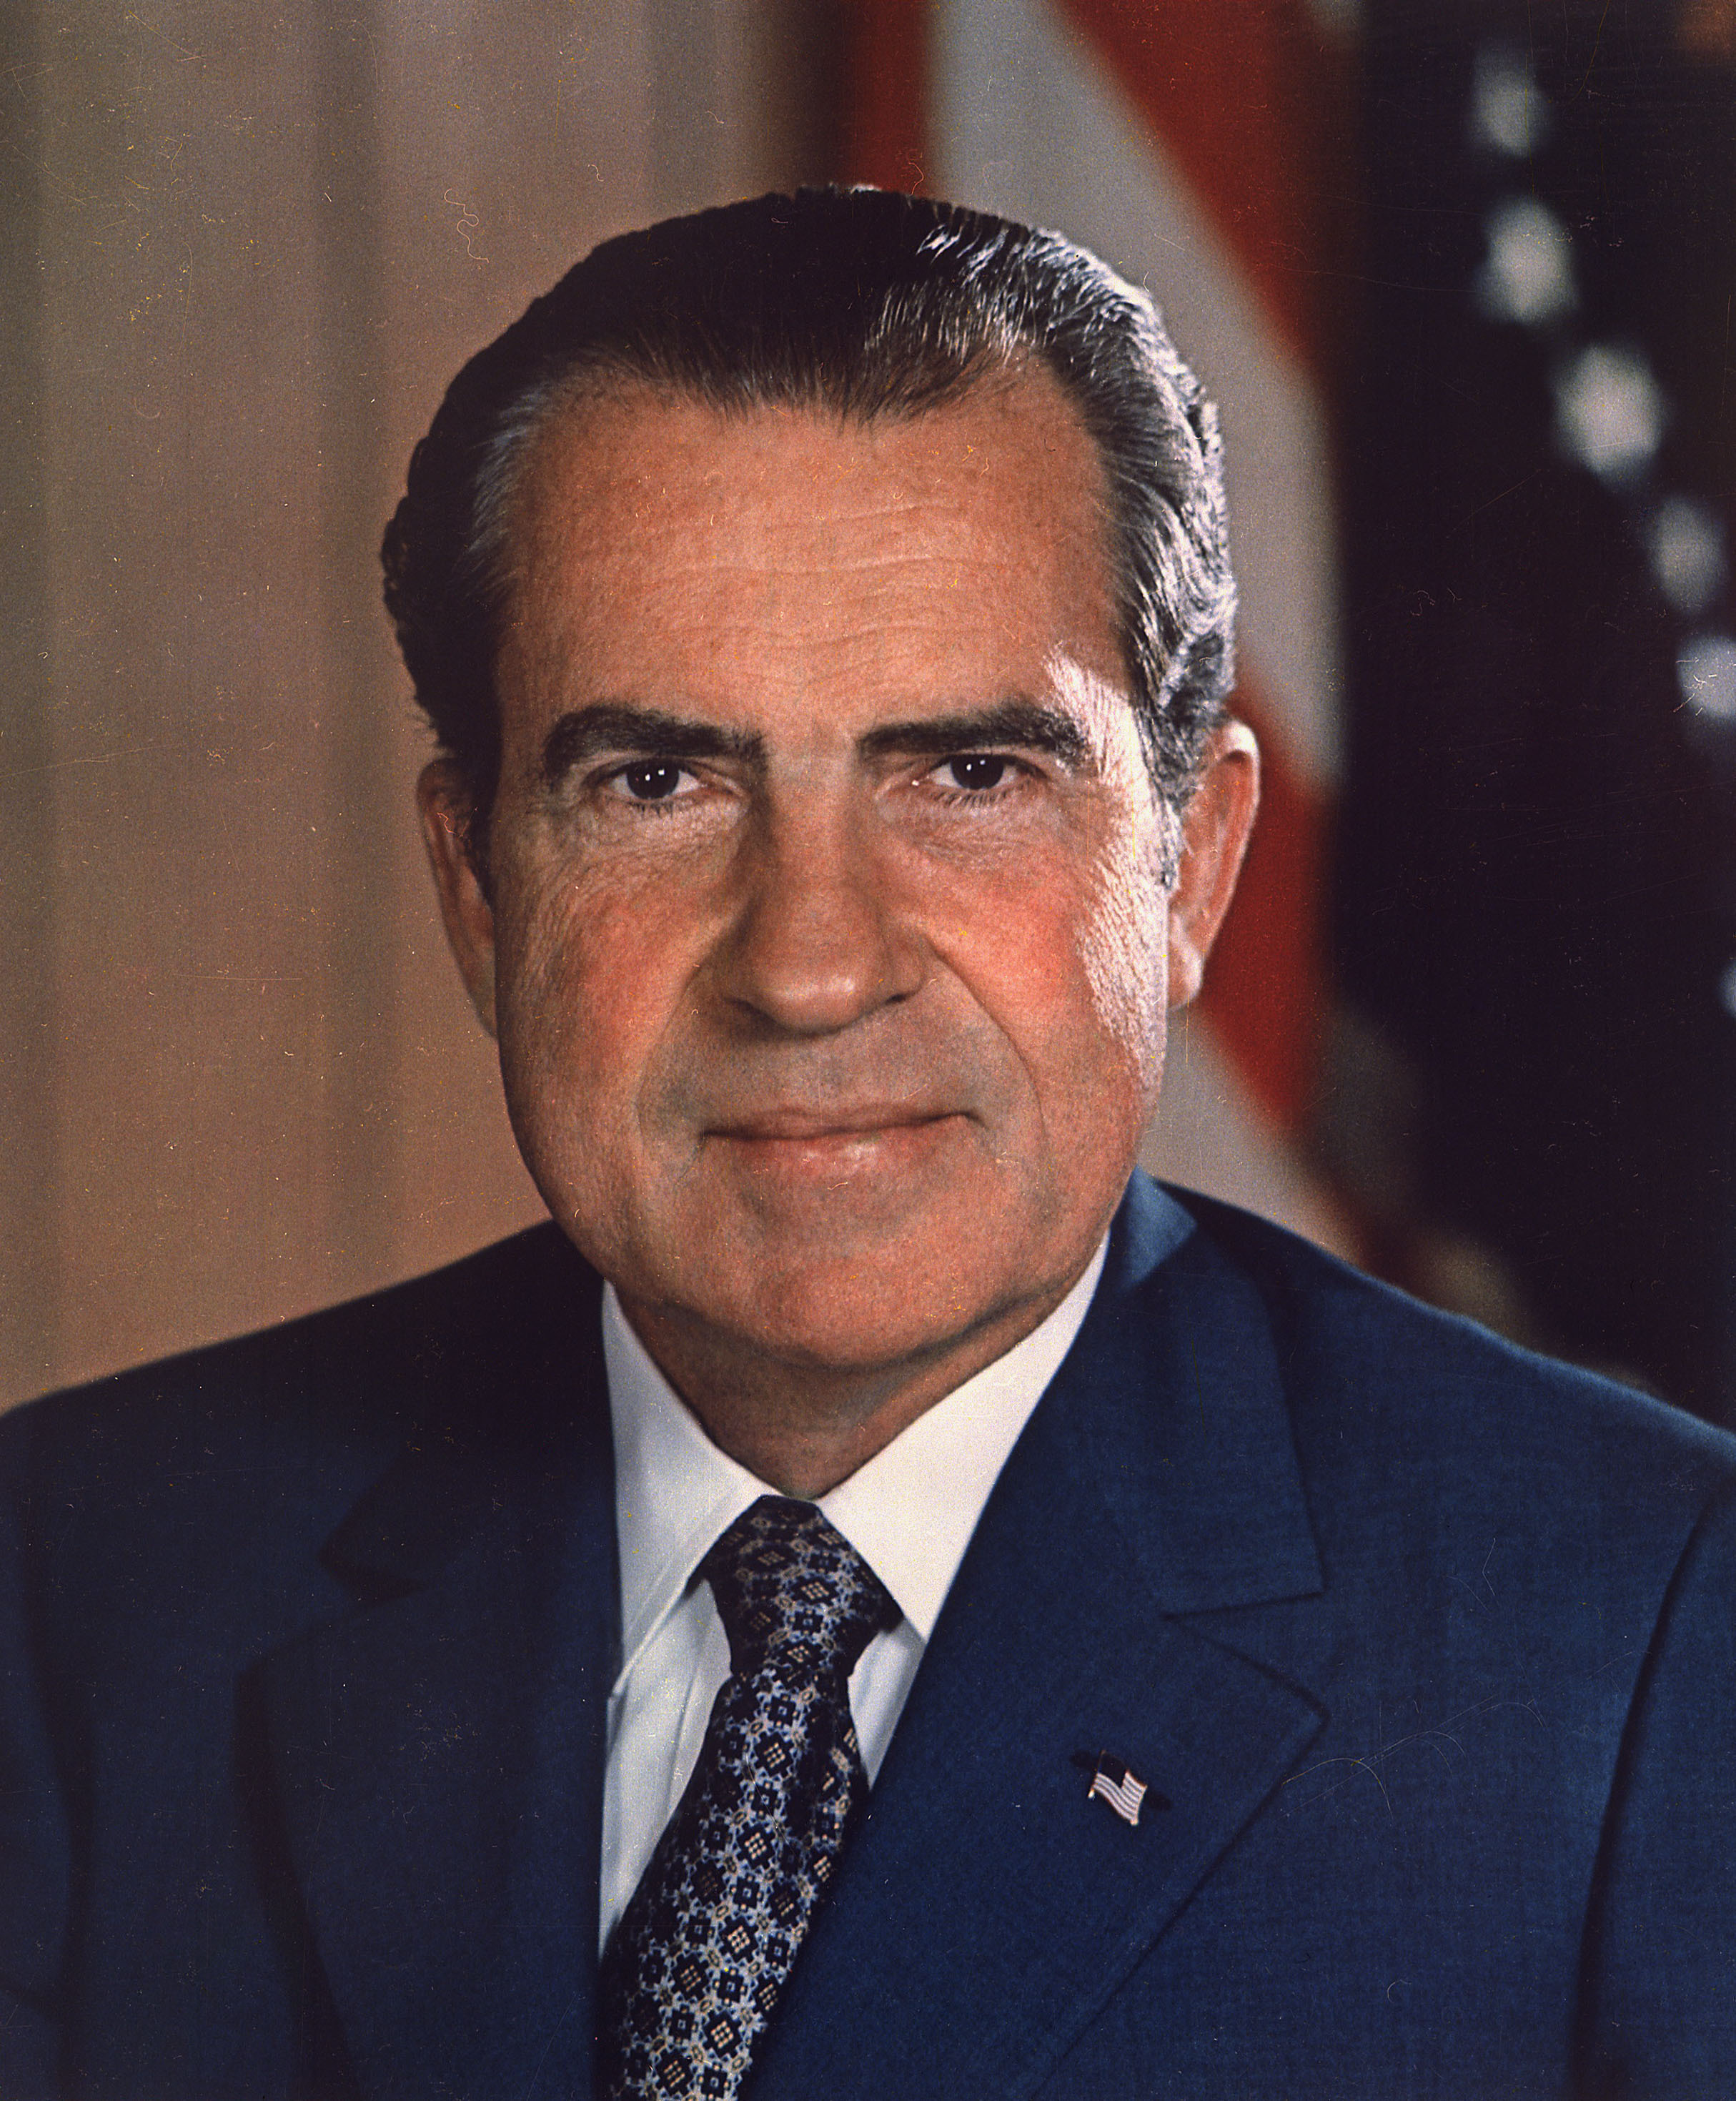 Richard_Nixon_presidential_portrait.jpg